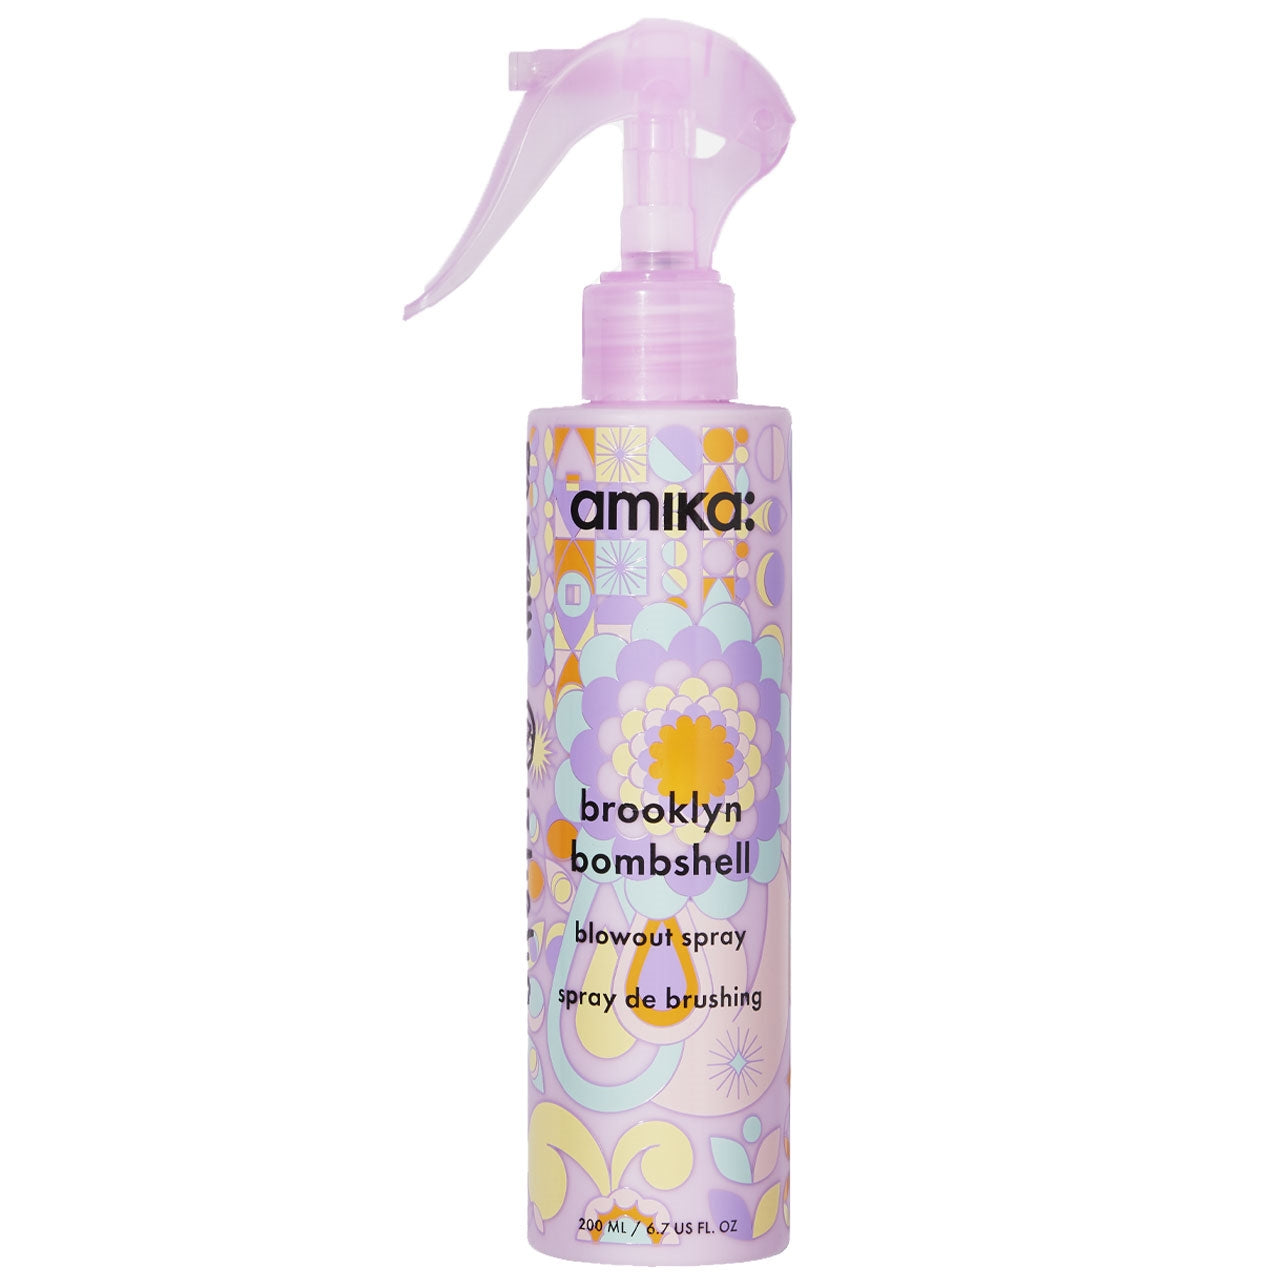 amika: brooklyn bombshell blowout spray